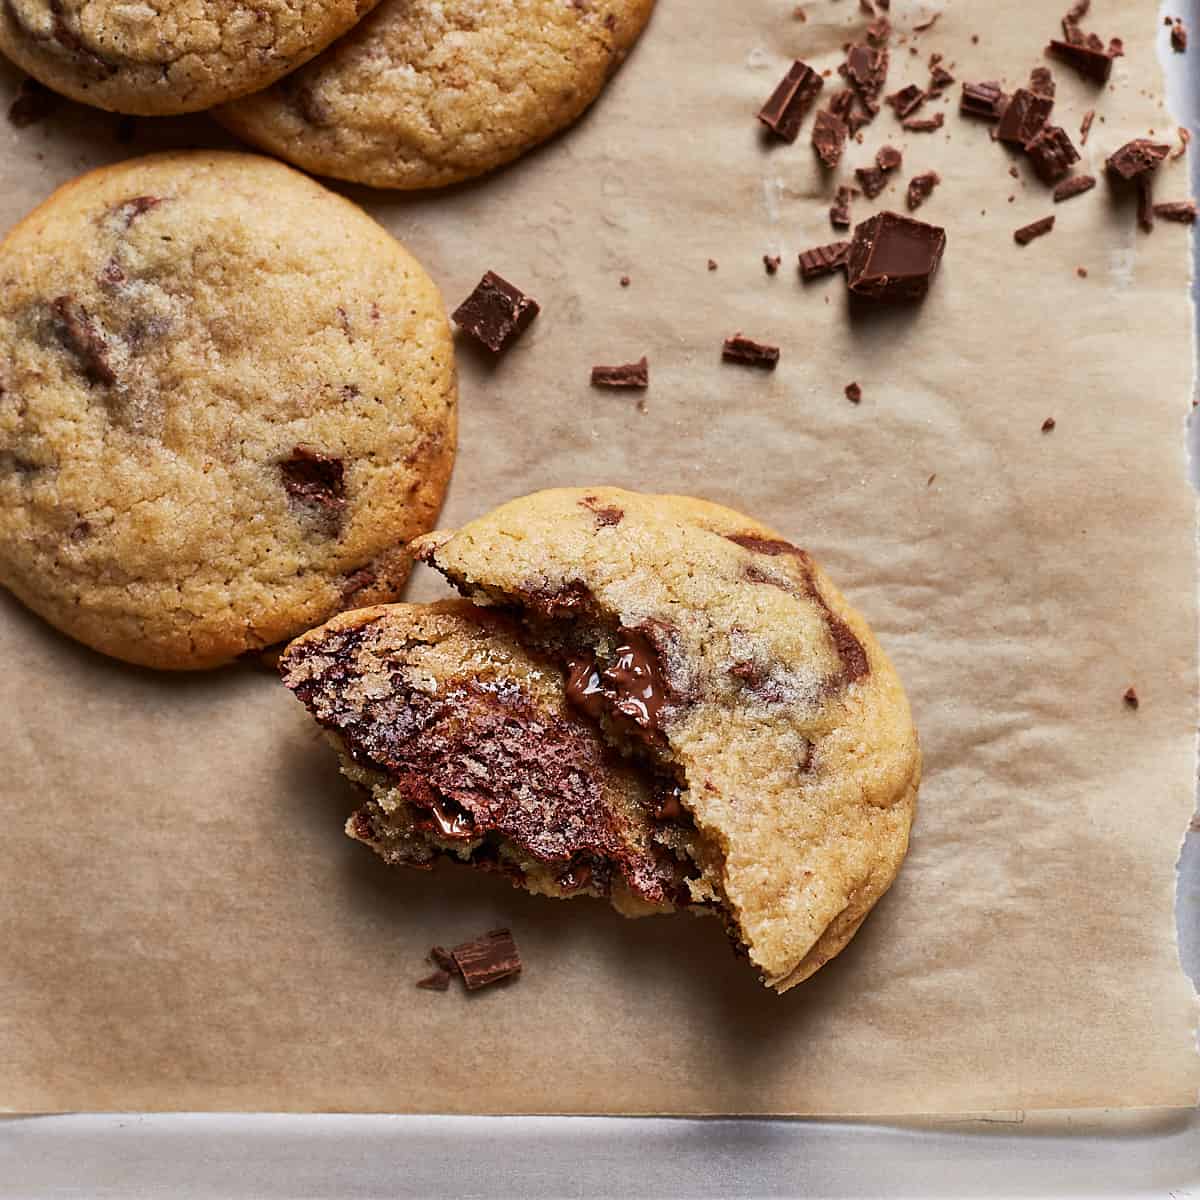 Cookie broken in half on a baking sheet